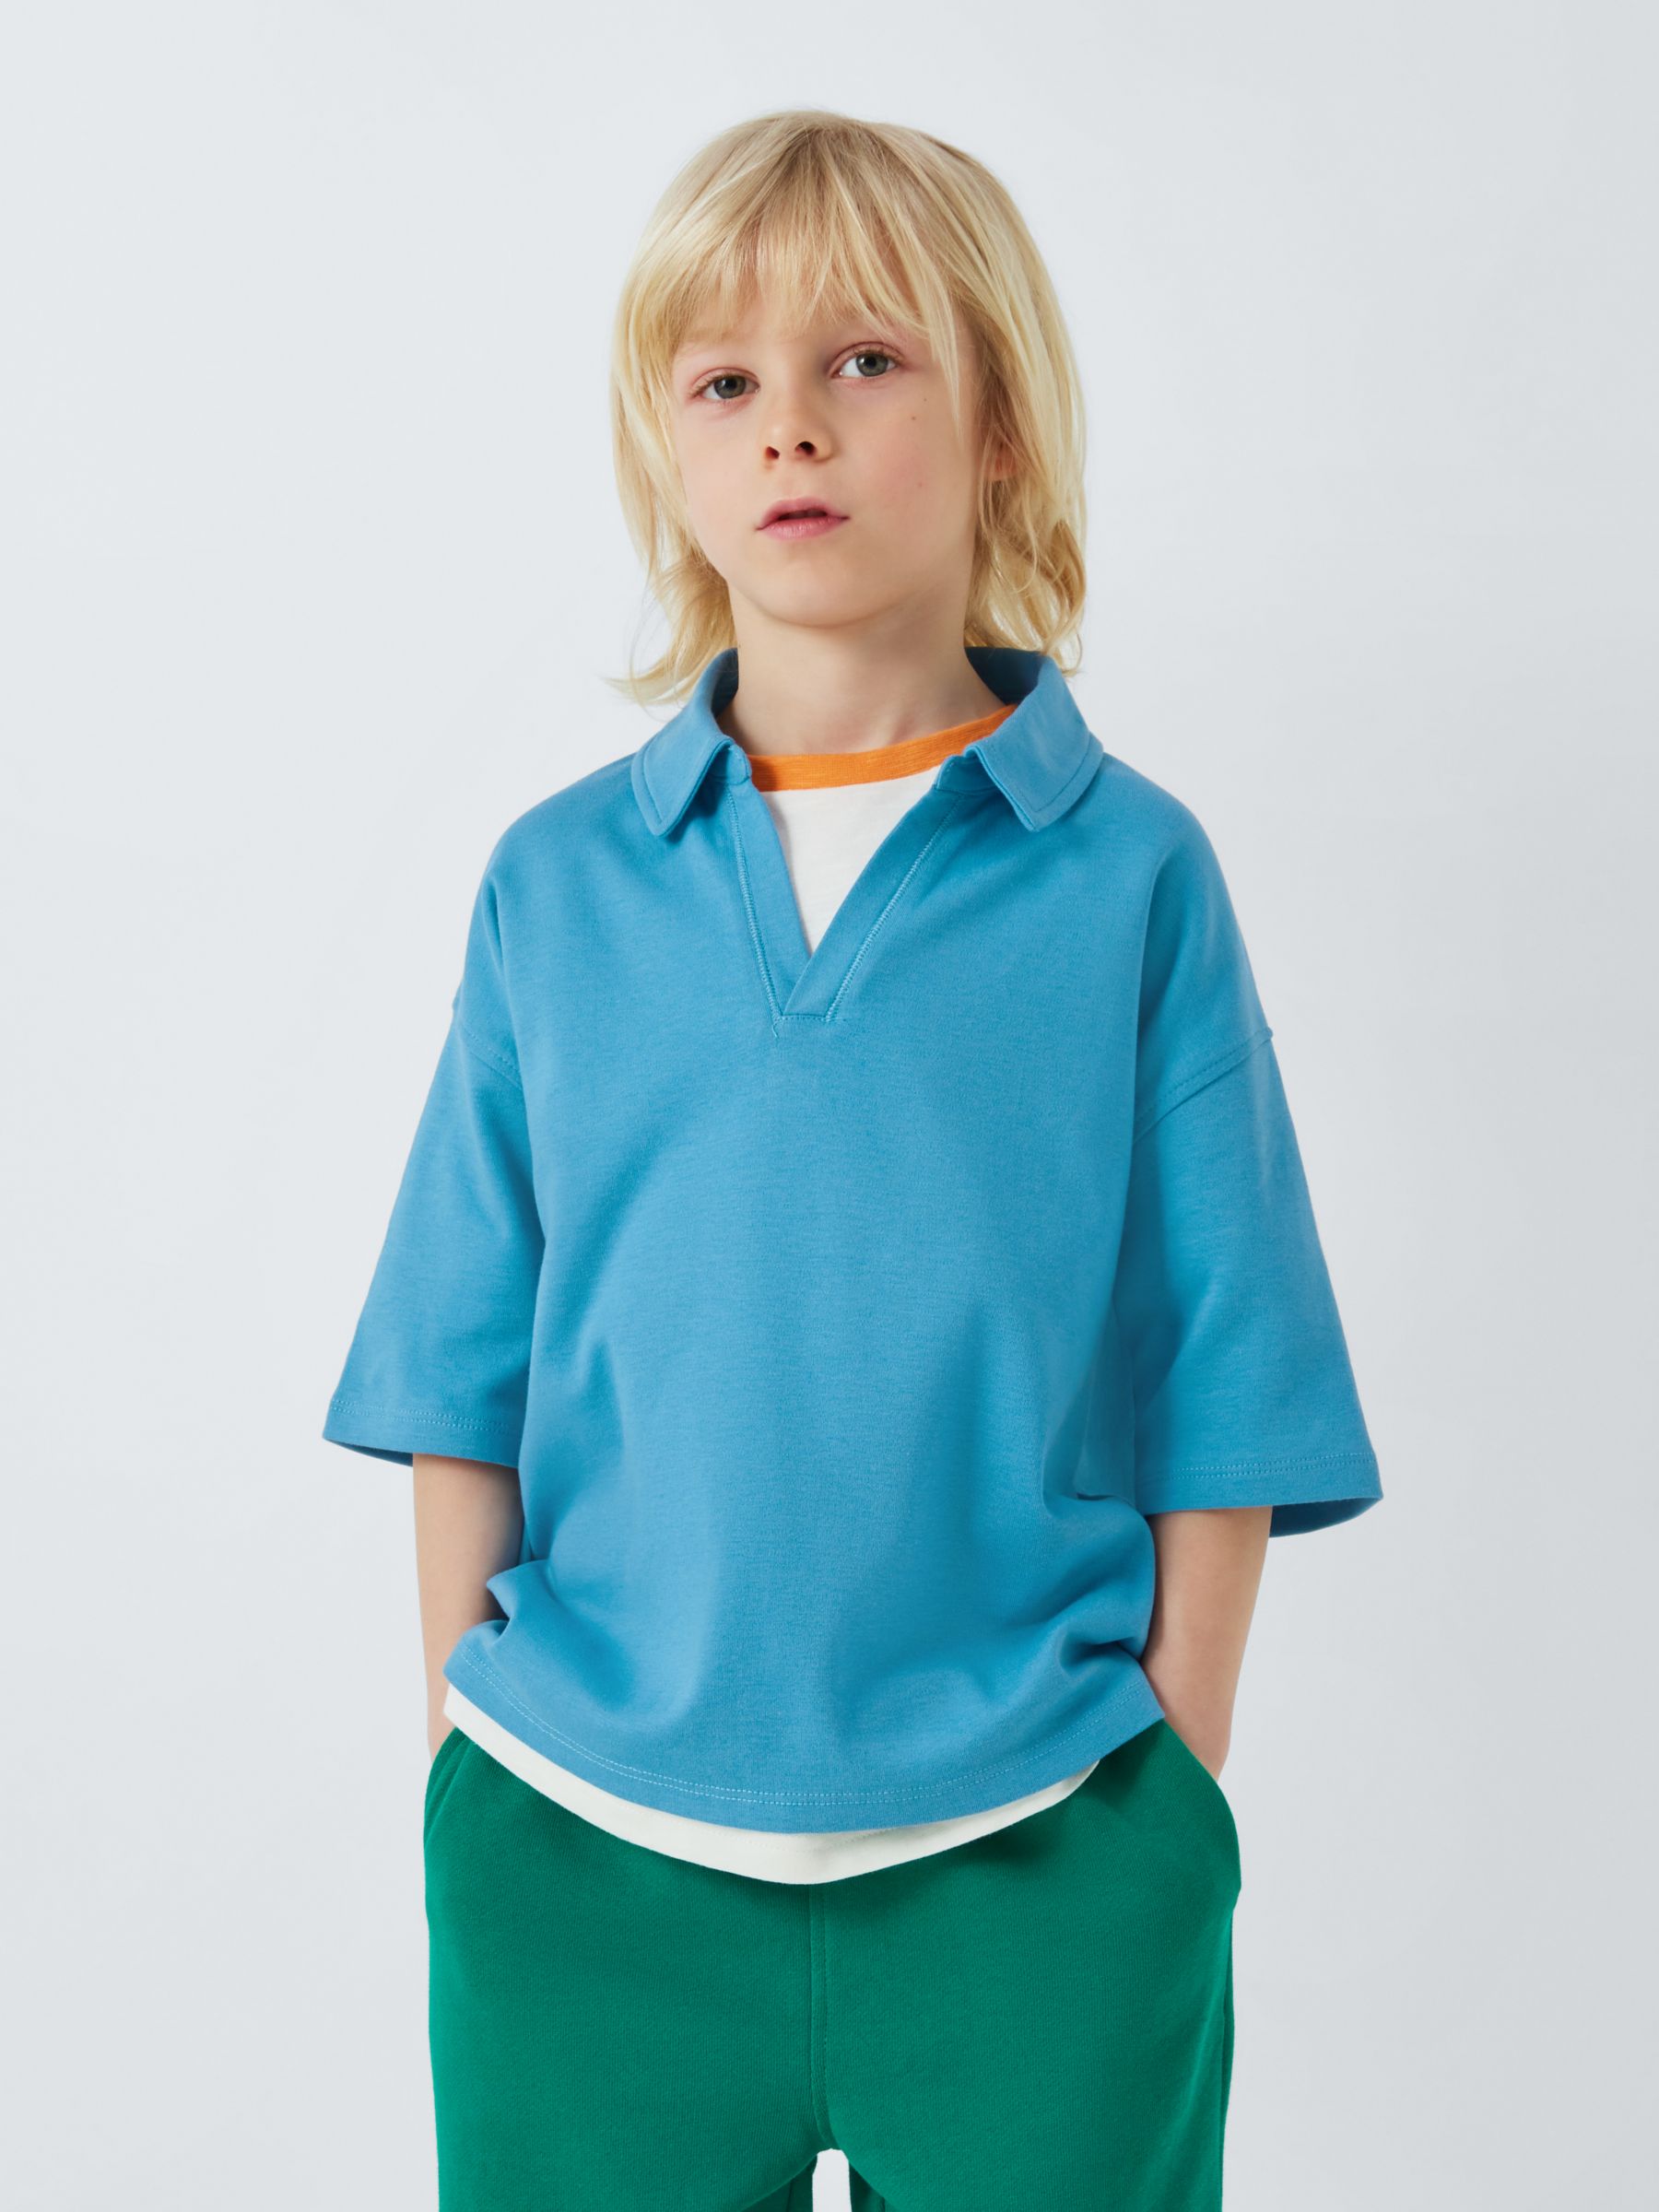 John Lewis ANYDAY Kids' V Neck Polo Shirt, Niagara, 10 years